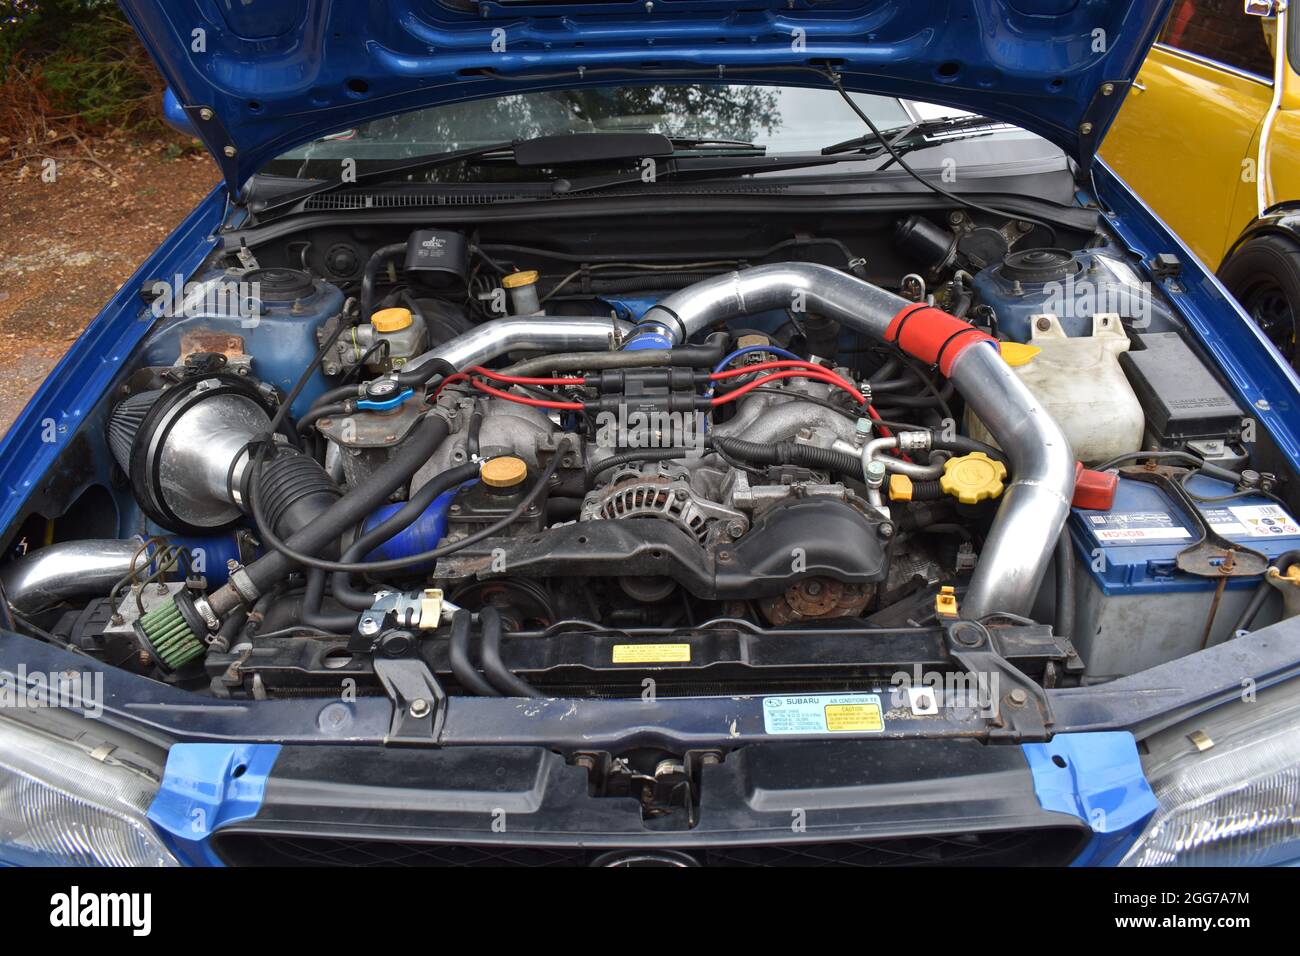 Subaru impreza engine hi-res stock photography and images - Alamy